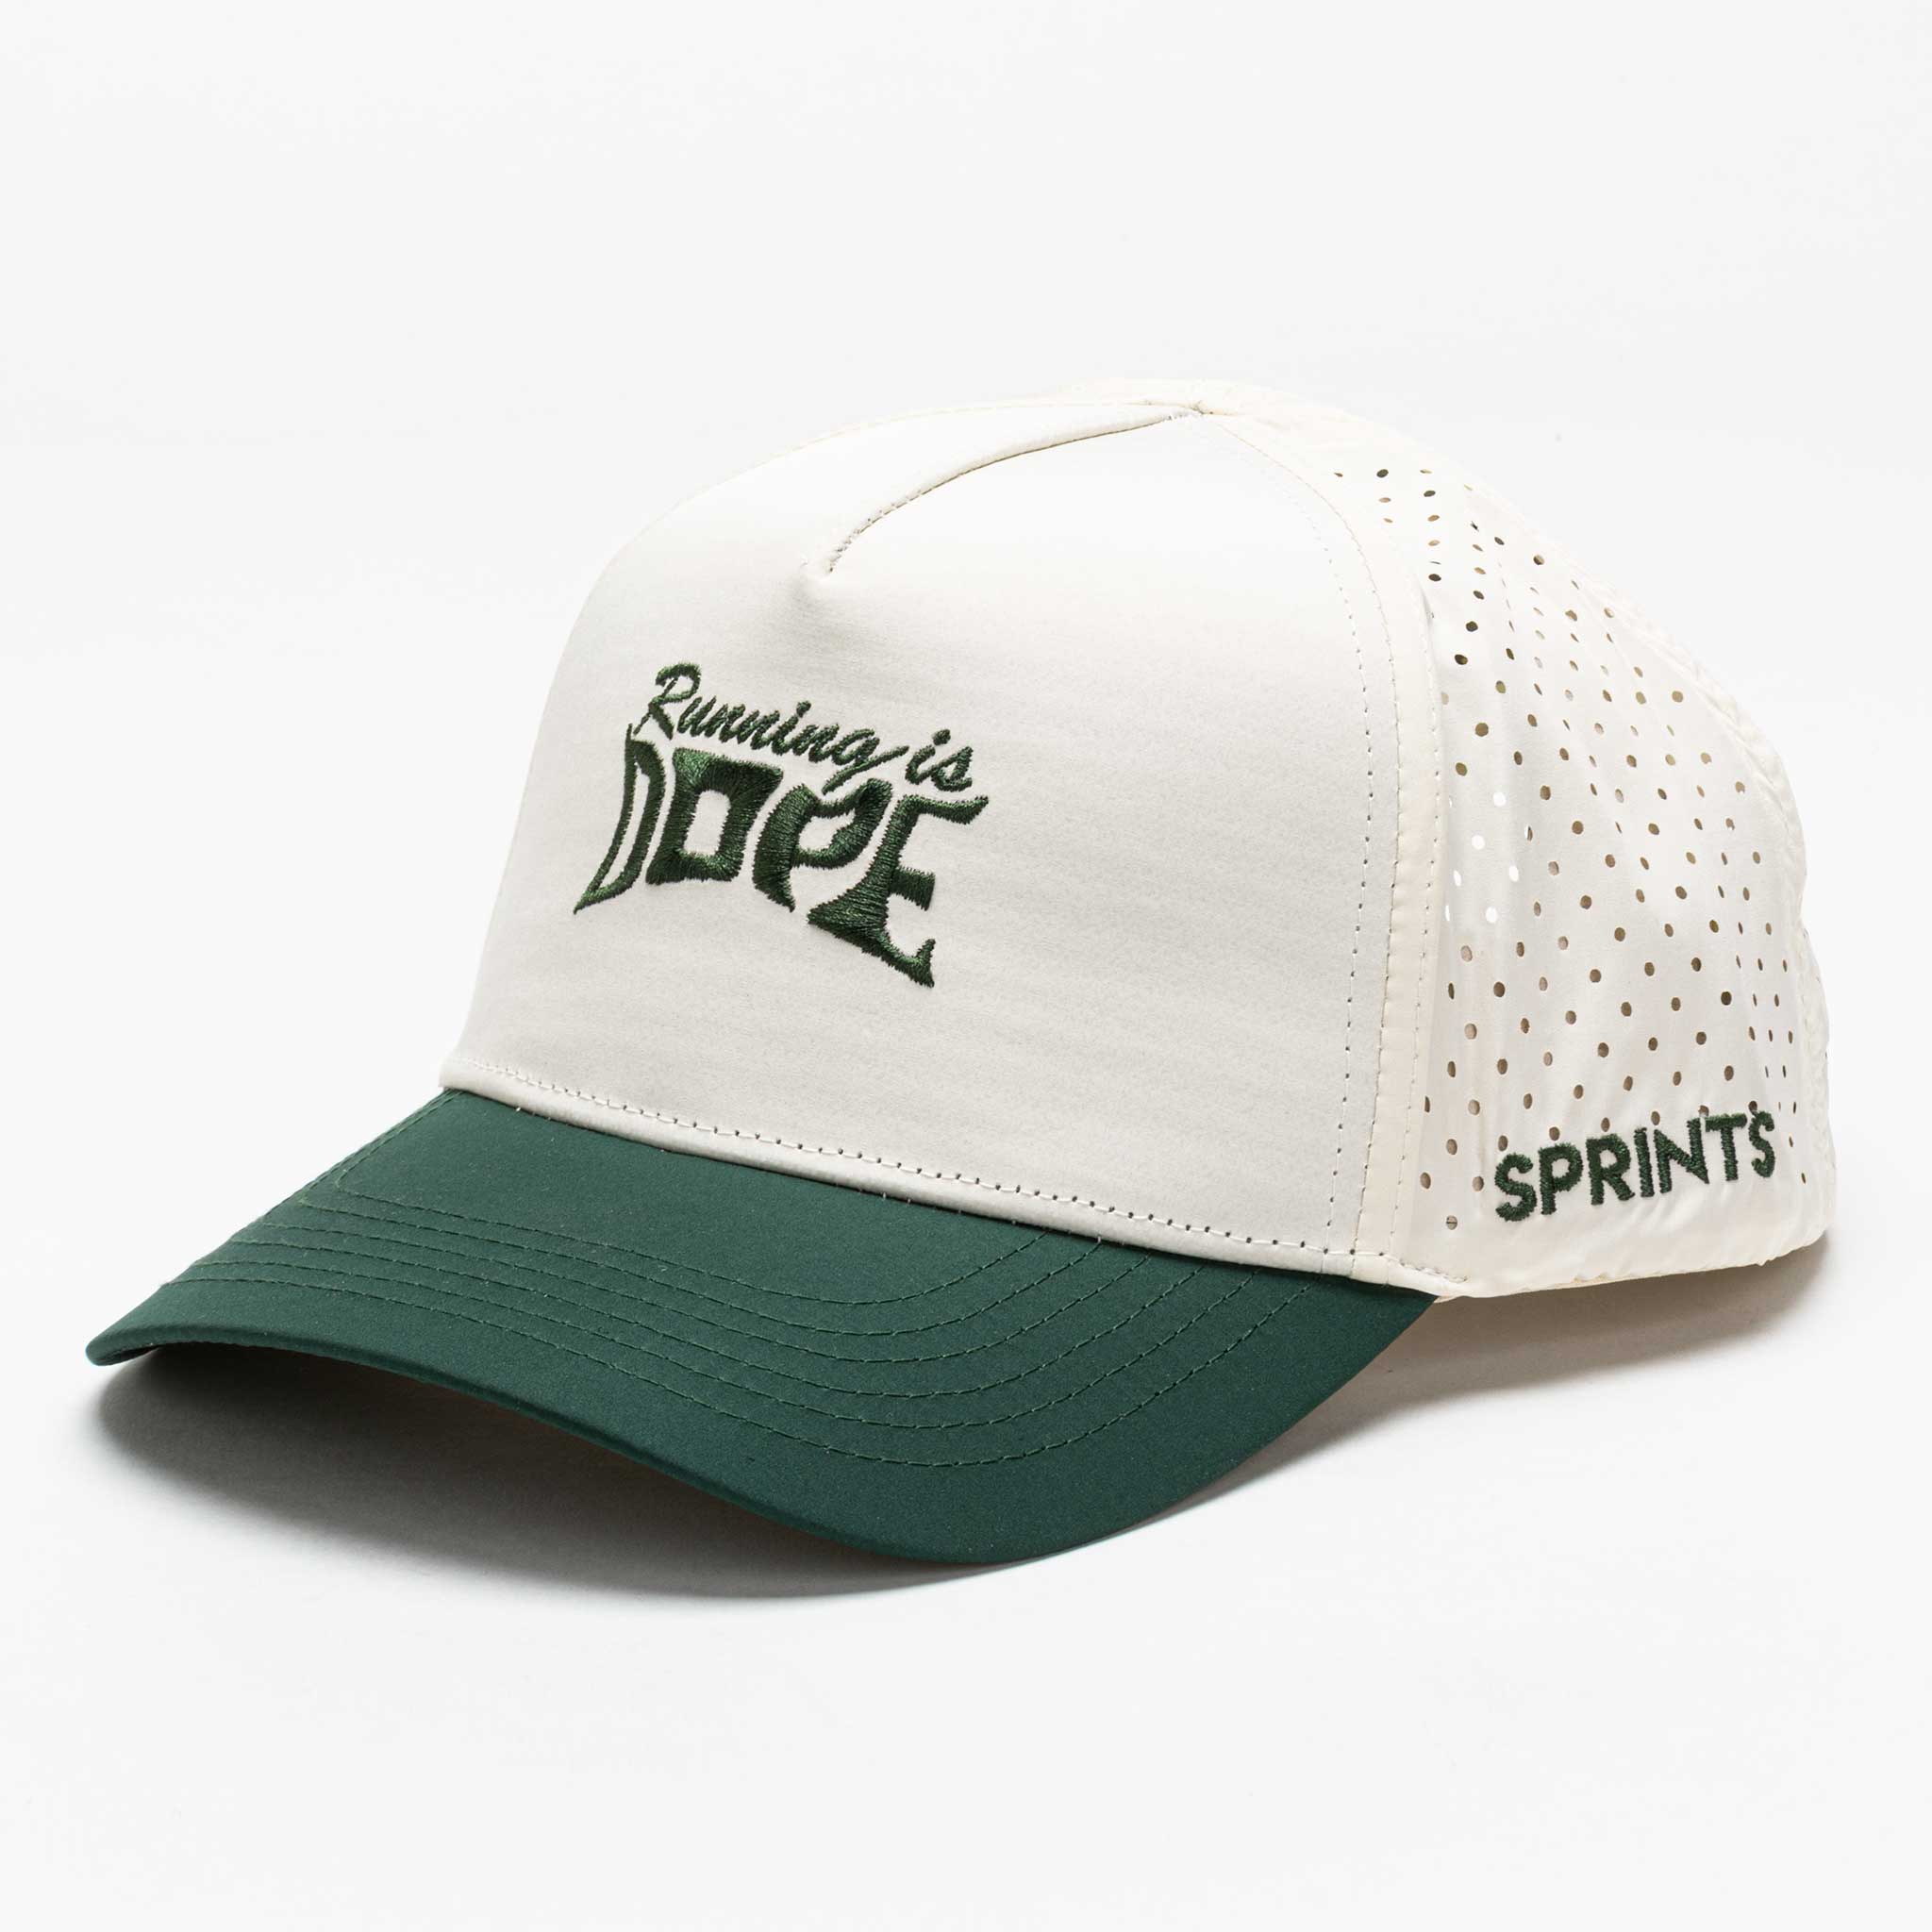 Sprints Running is Dope VP Hat